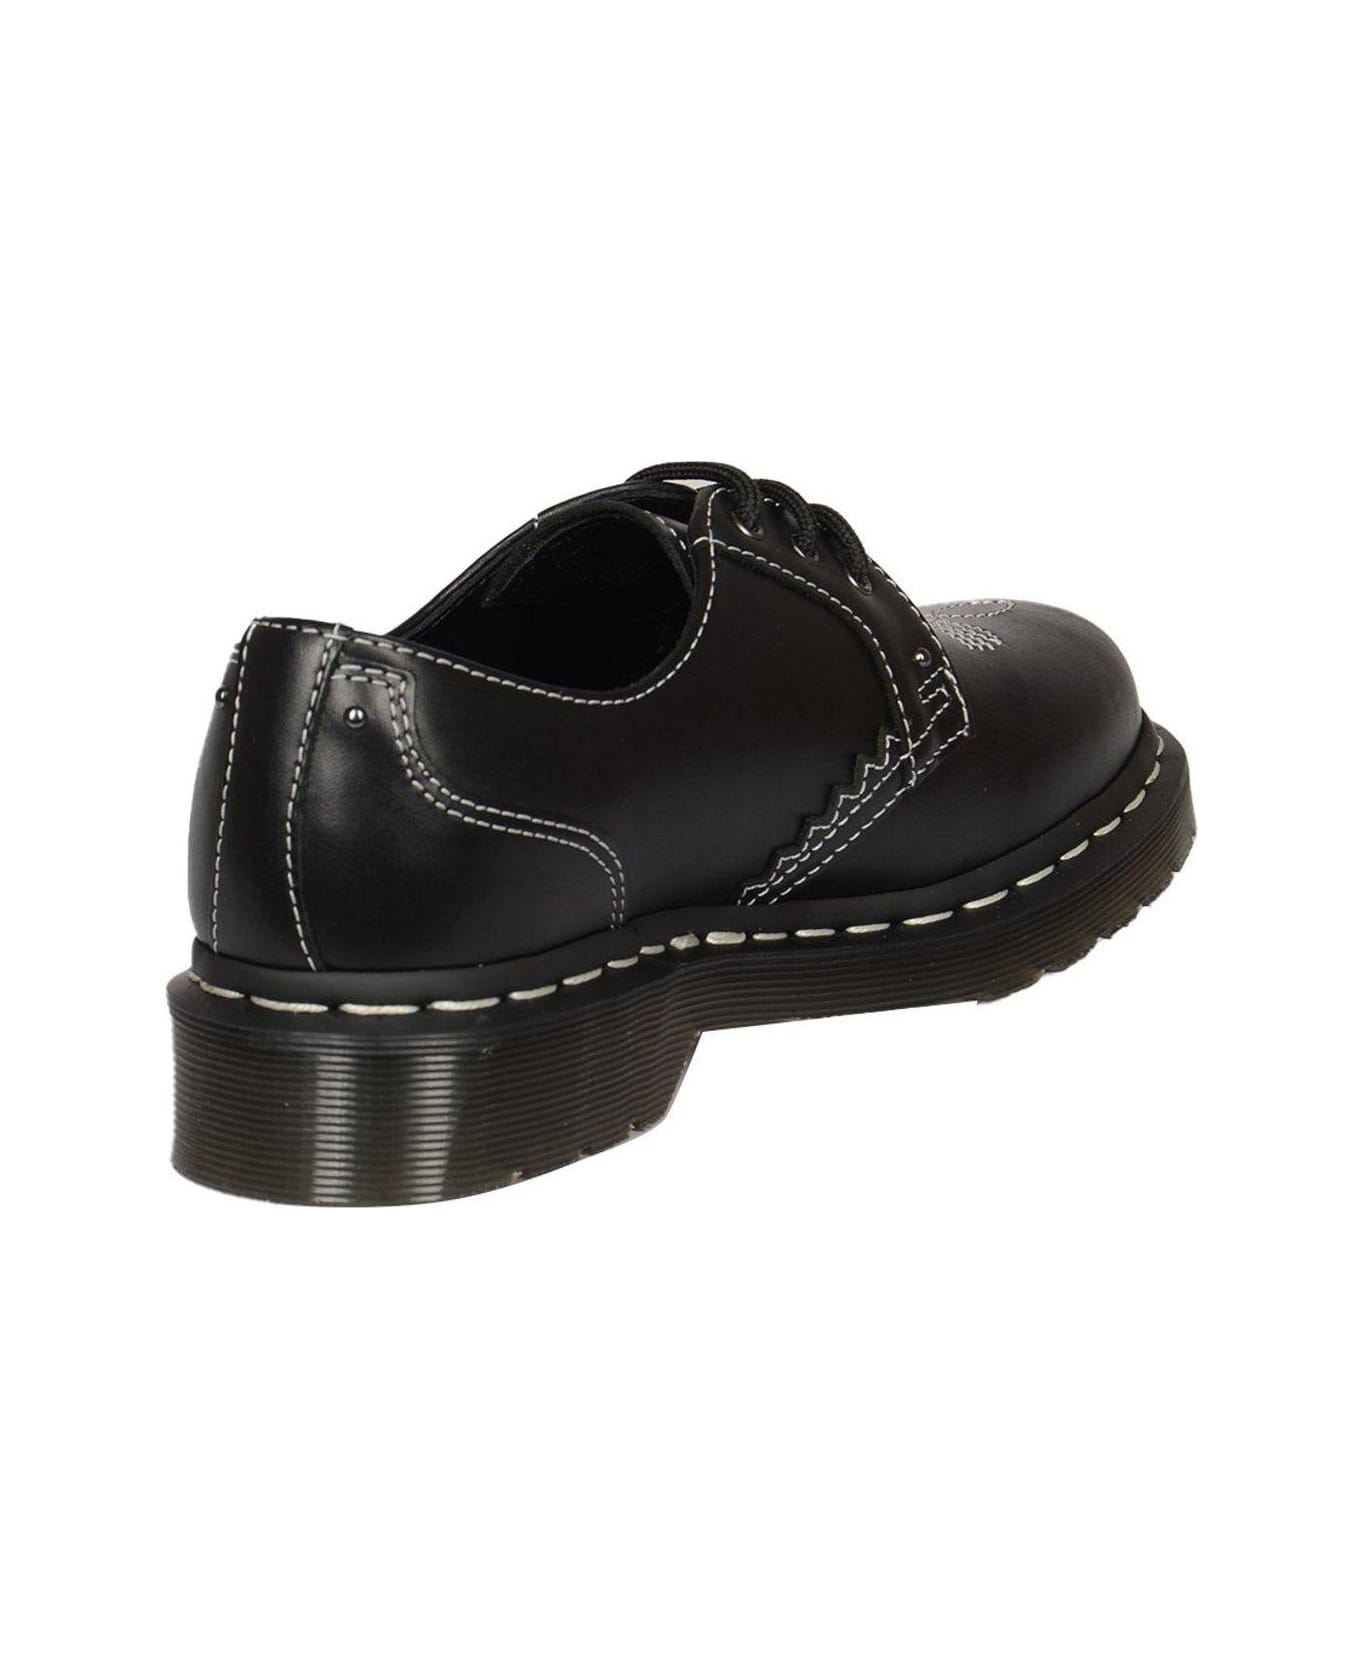 Dr. Martens Gothic Amerciana Oxford Shoes - Black Wanama